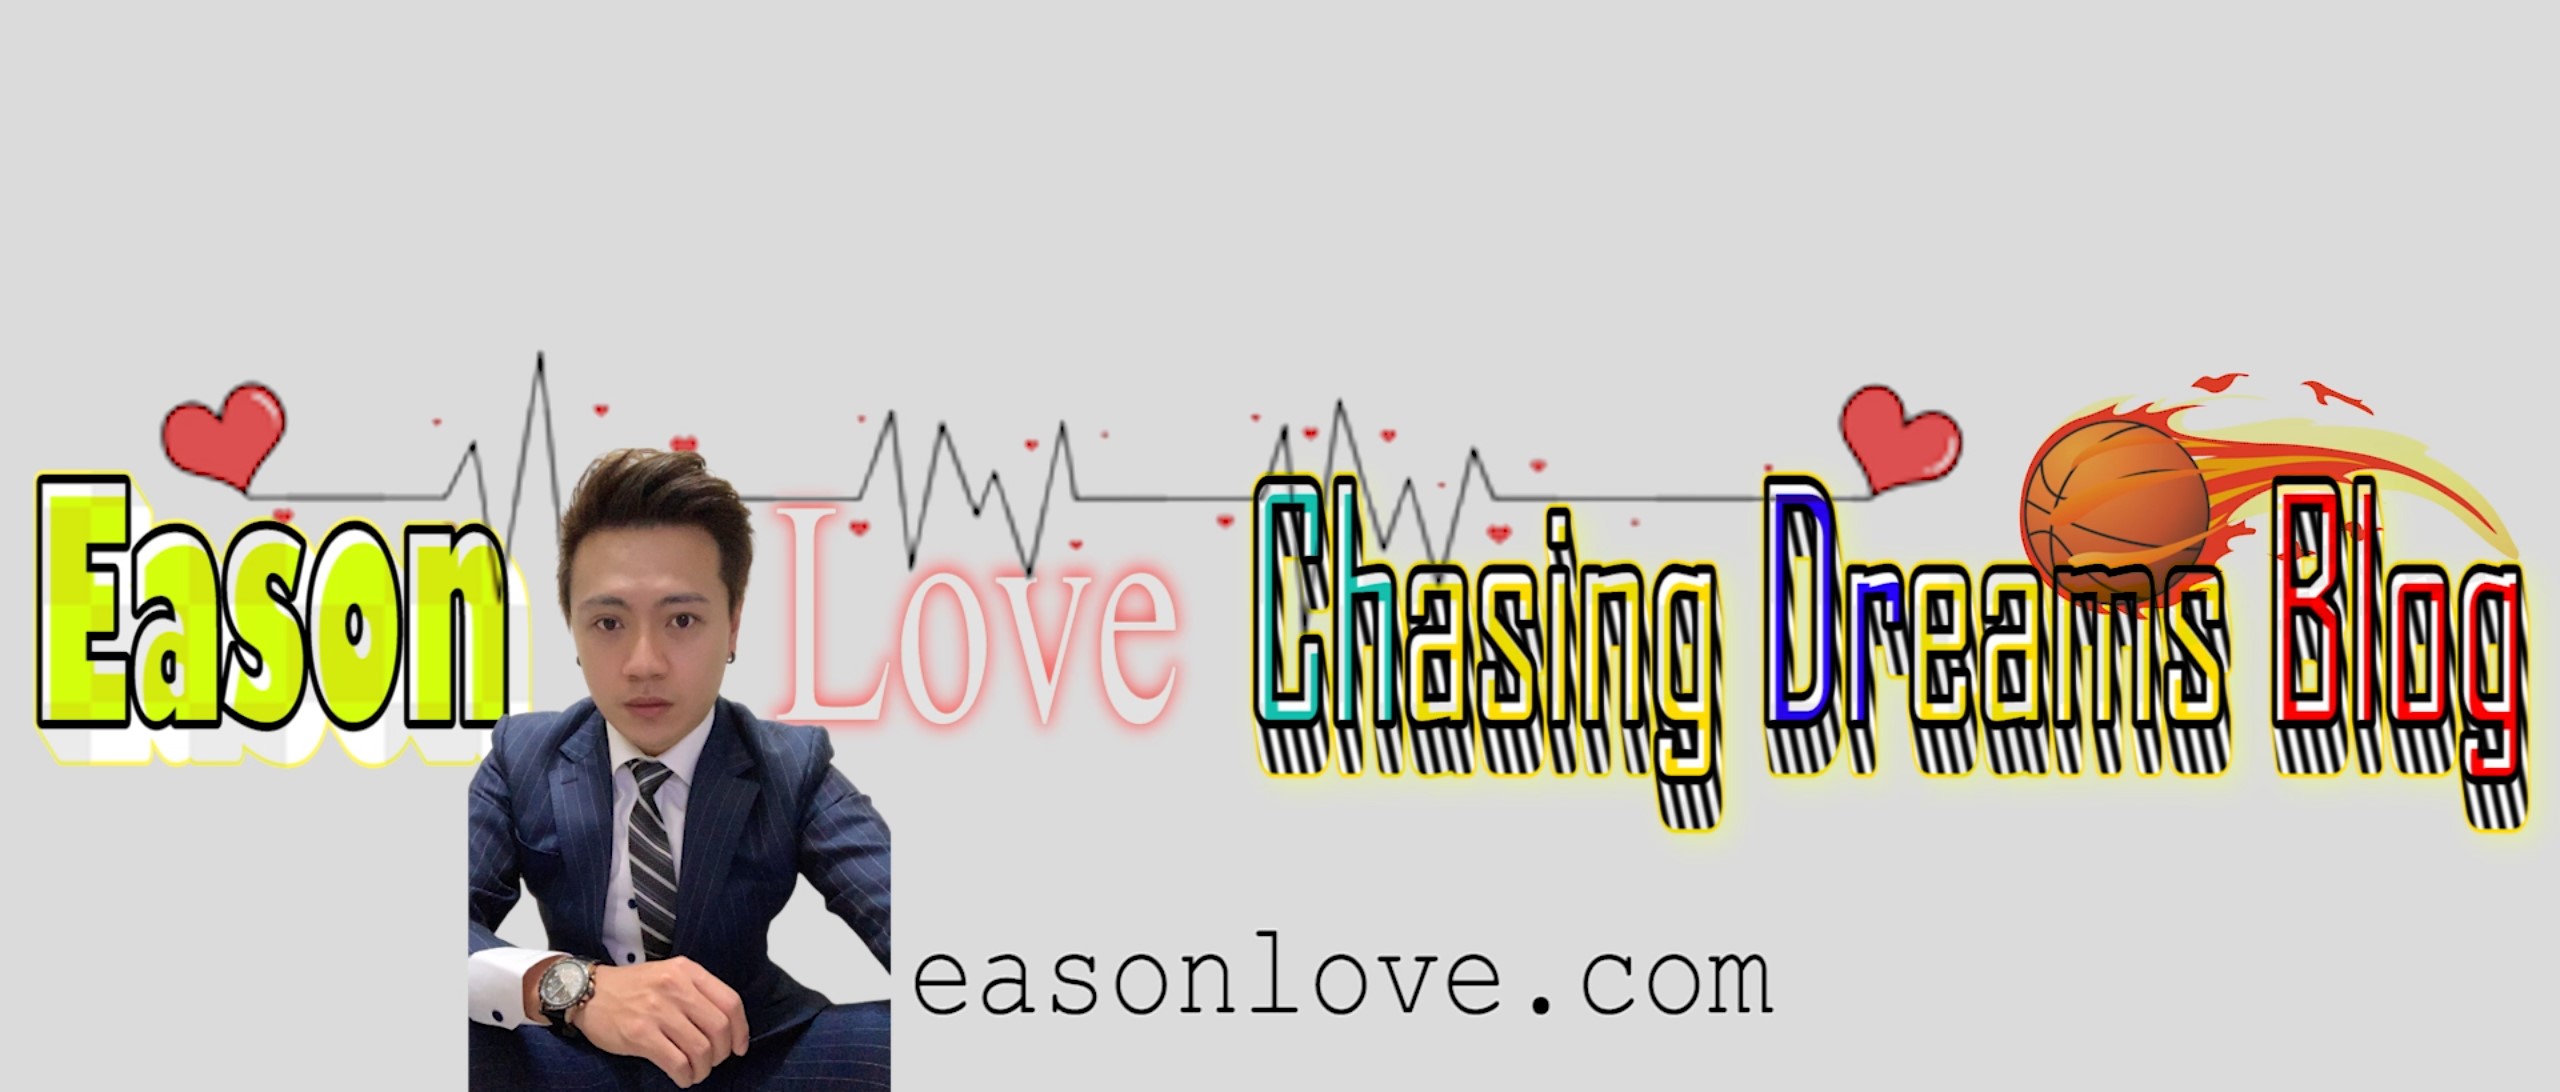 Welcome Eason Chasing Dreams Blog